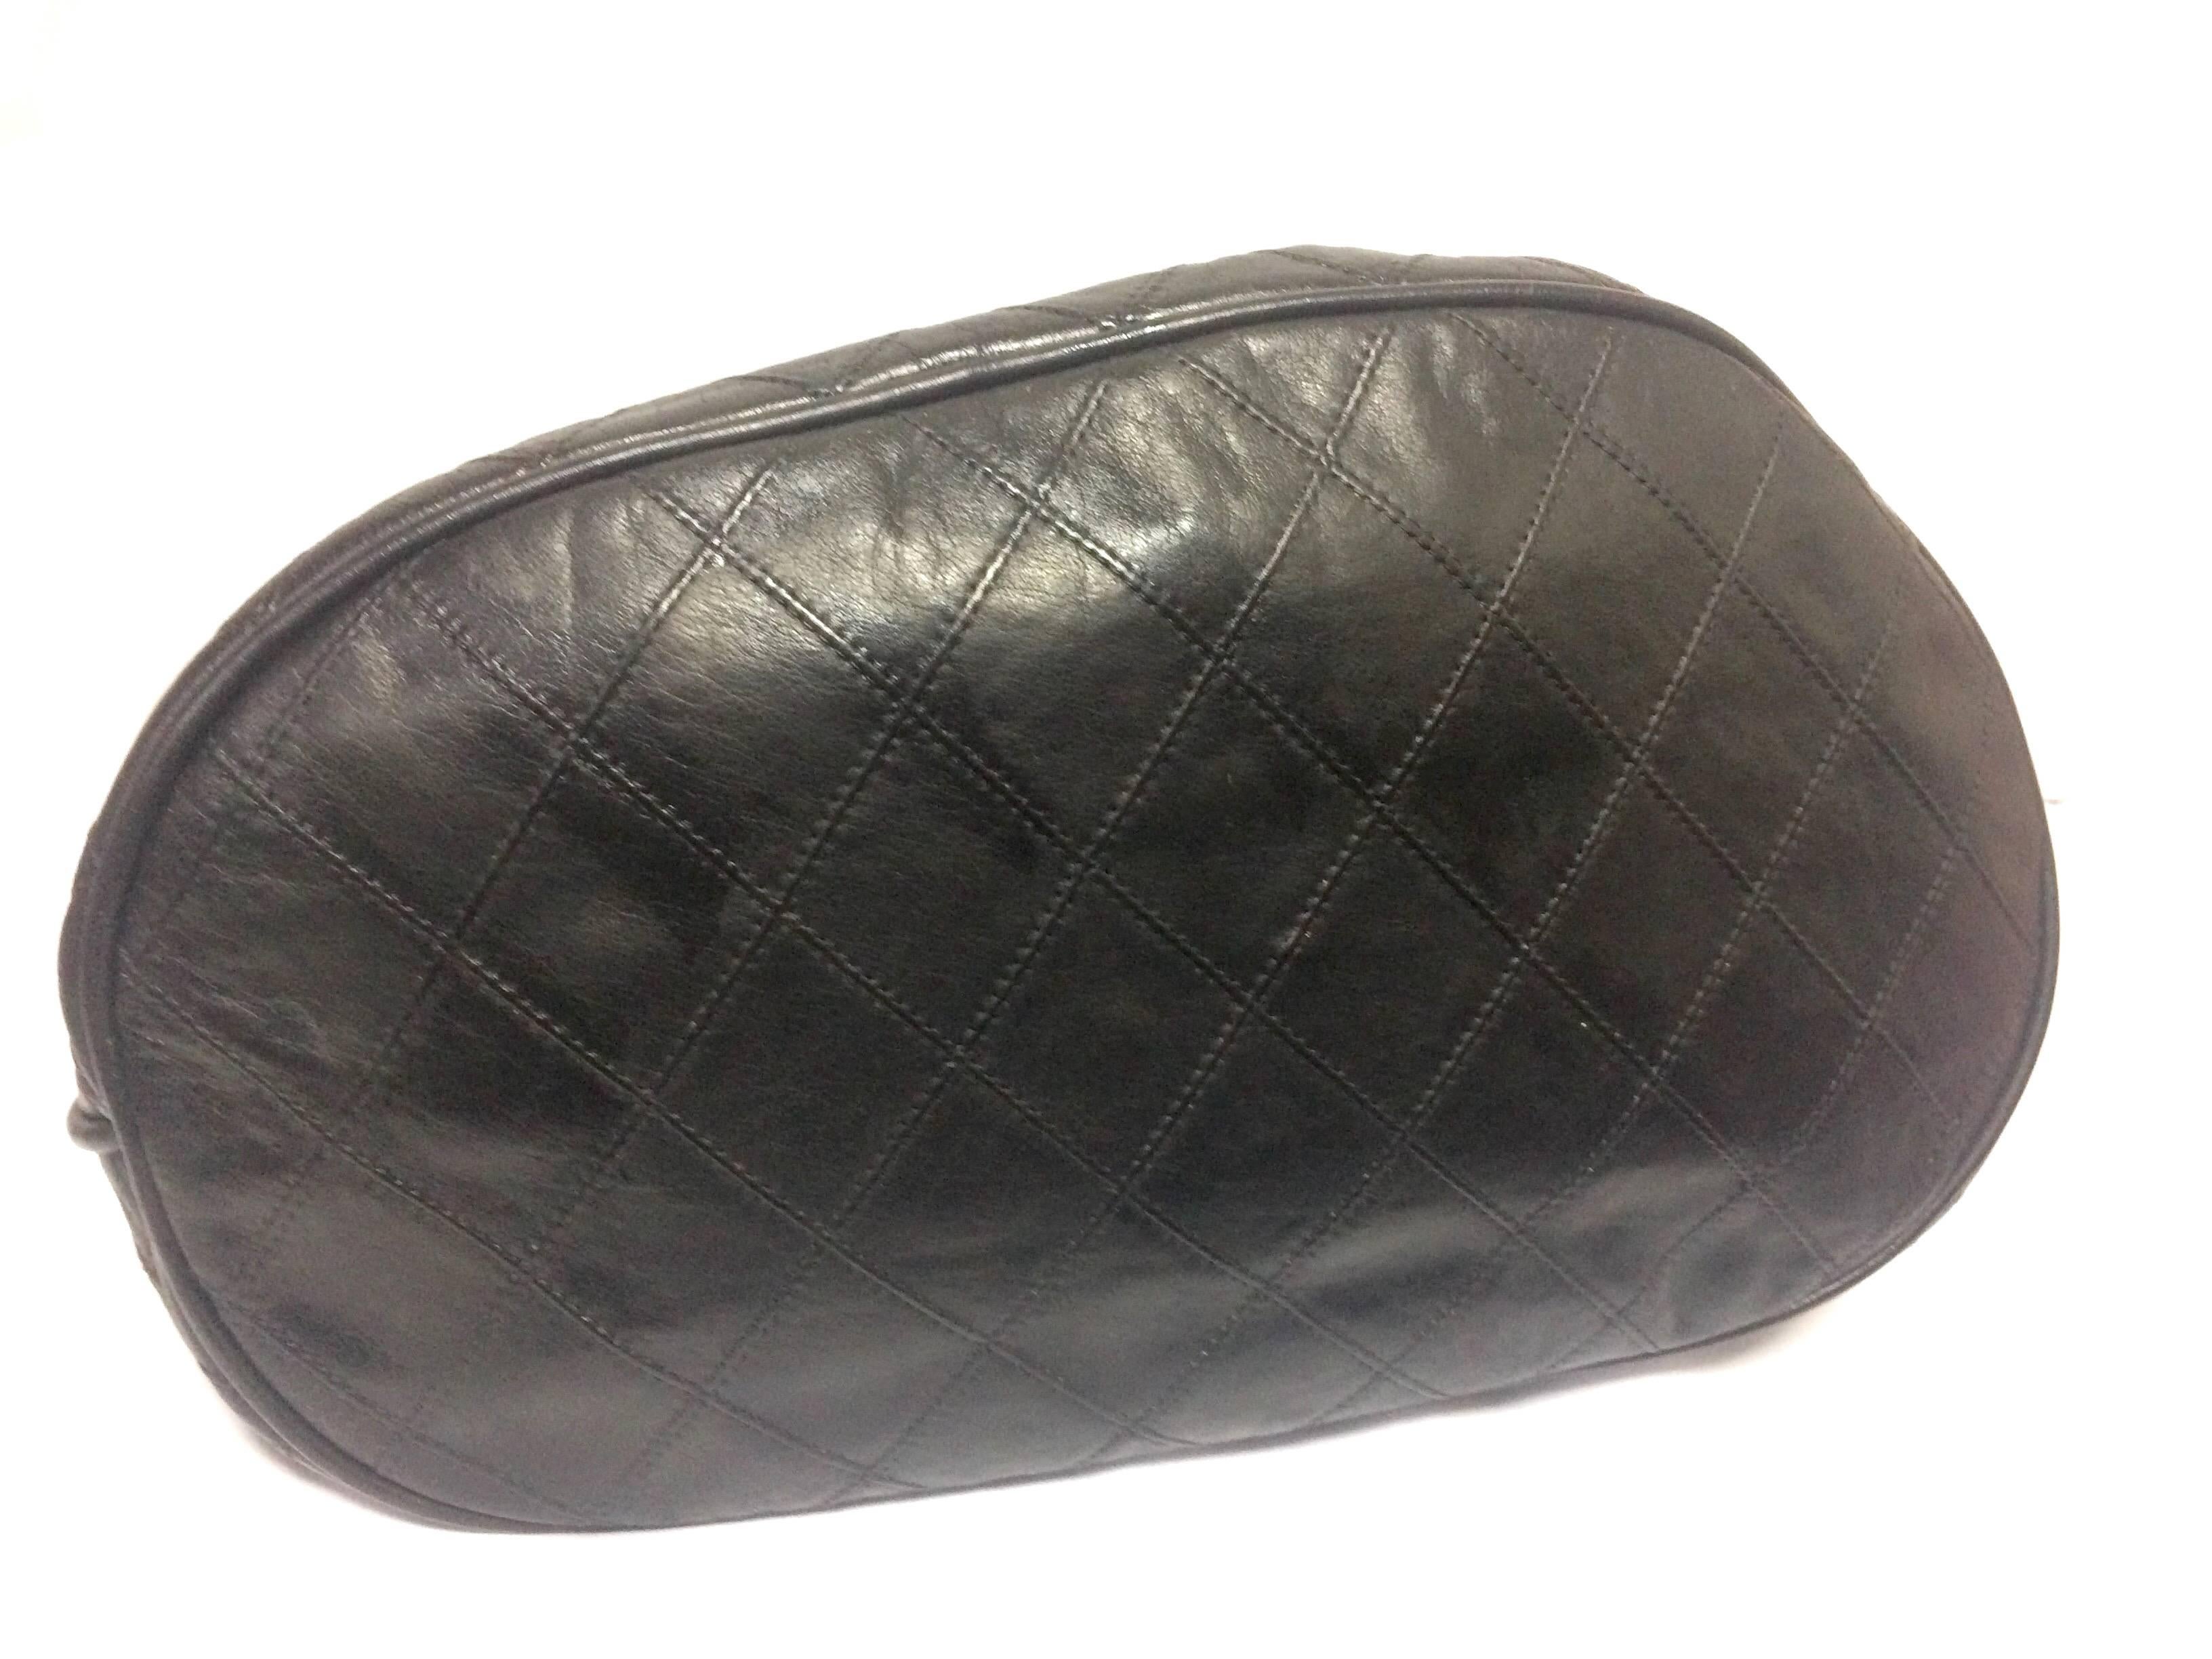 Vintage CHANEL black and beige calf leather hobo bucket shoulder bag with charm. 1